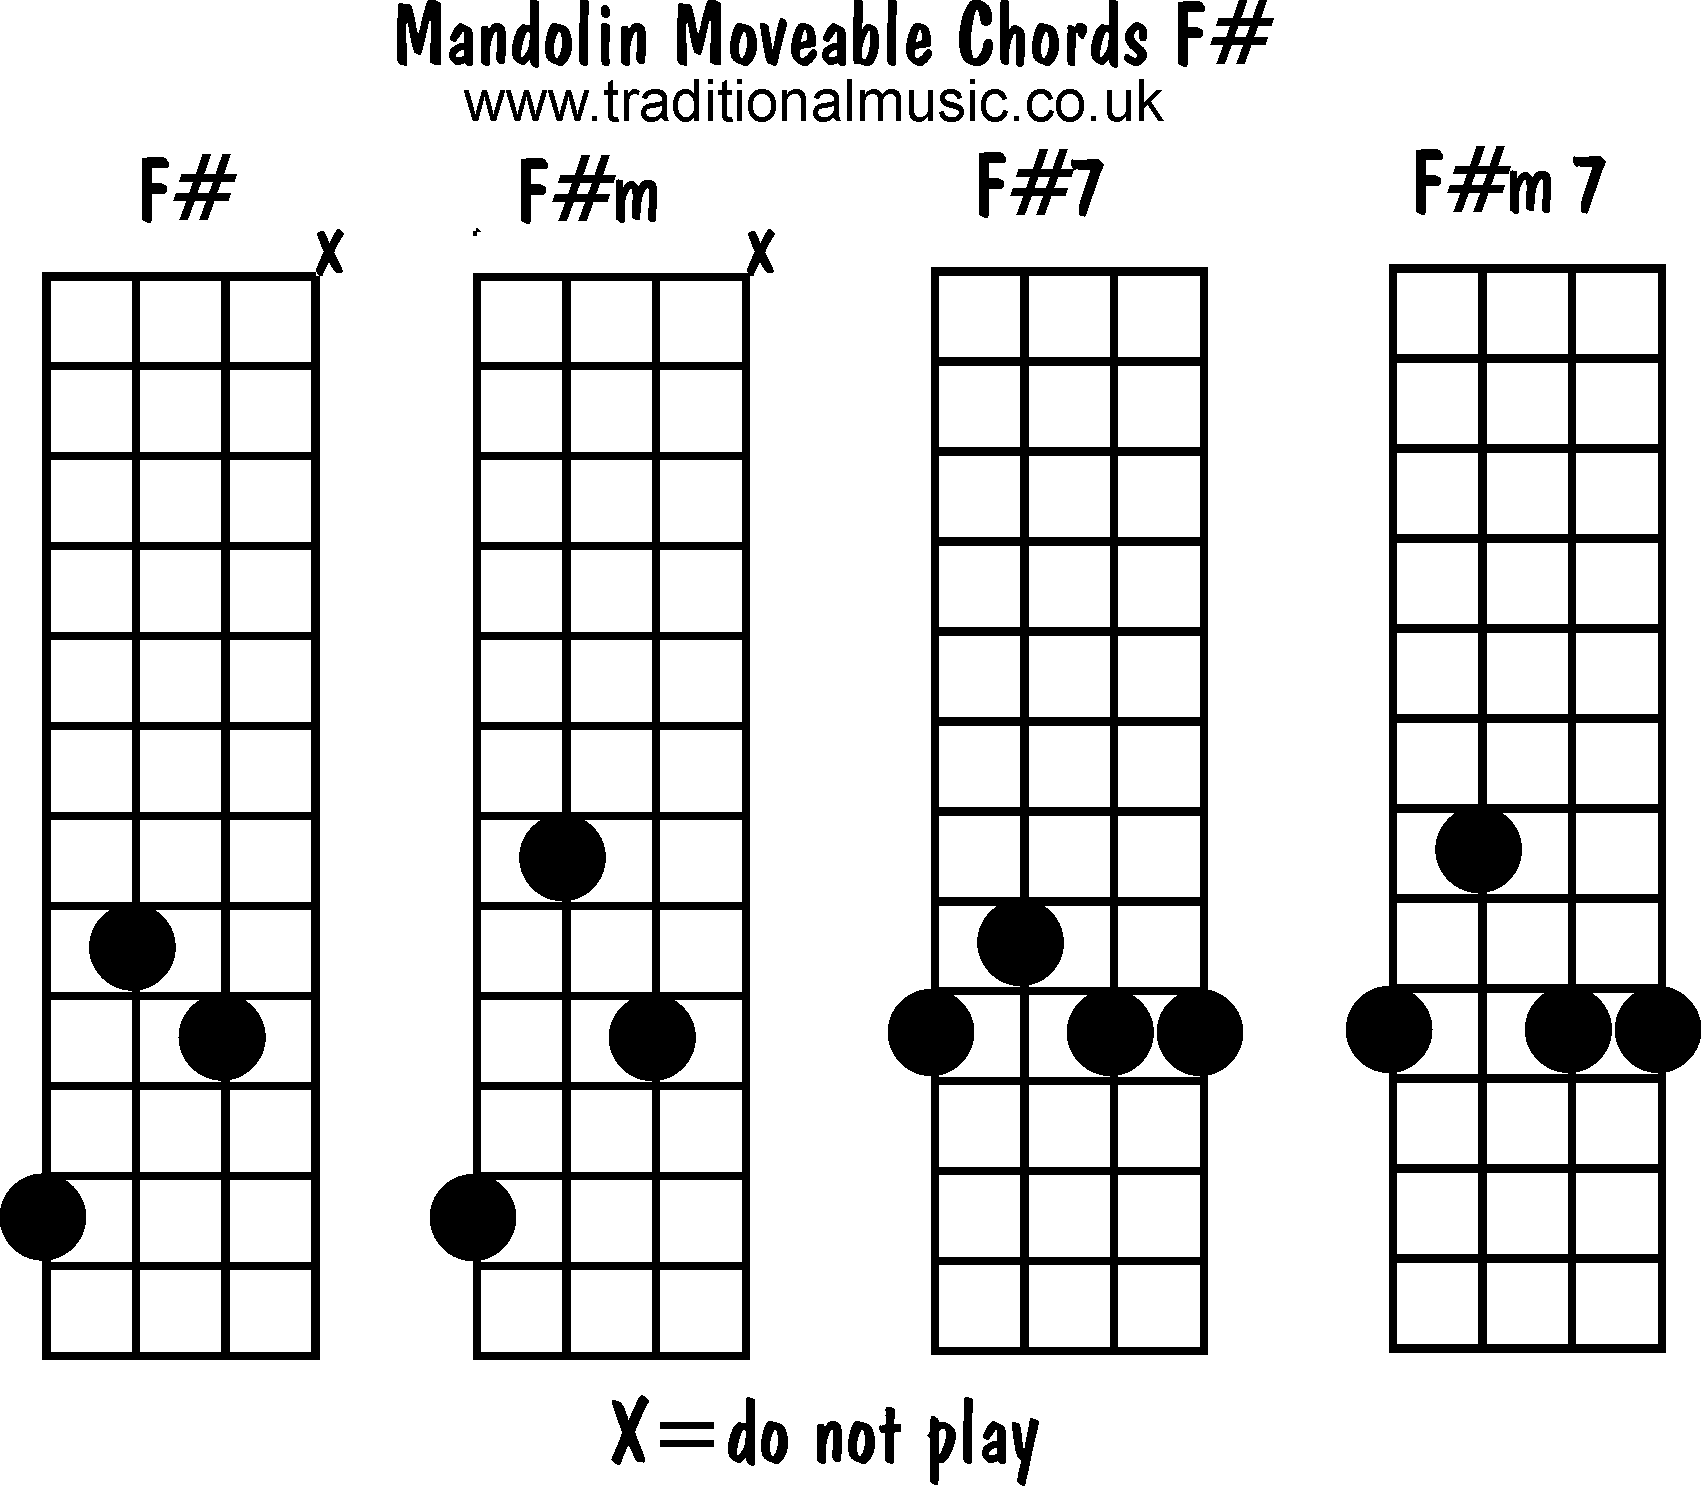 Moveable mandolin chords: F#, F#m, F#7, F#m7